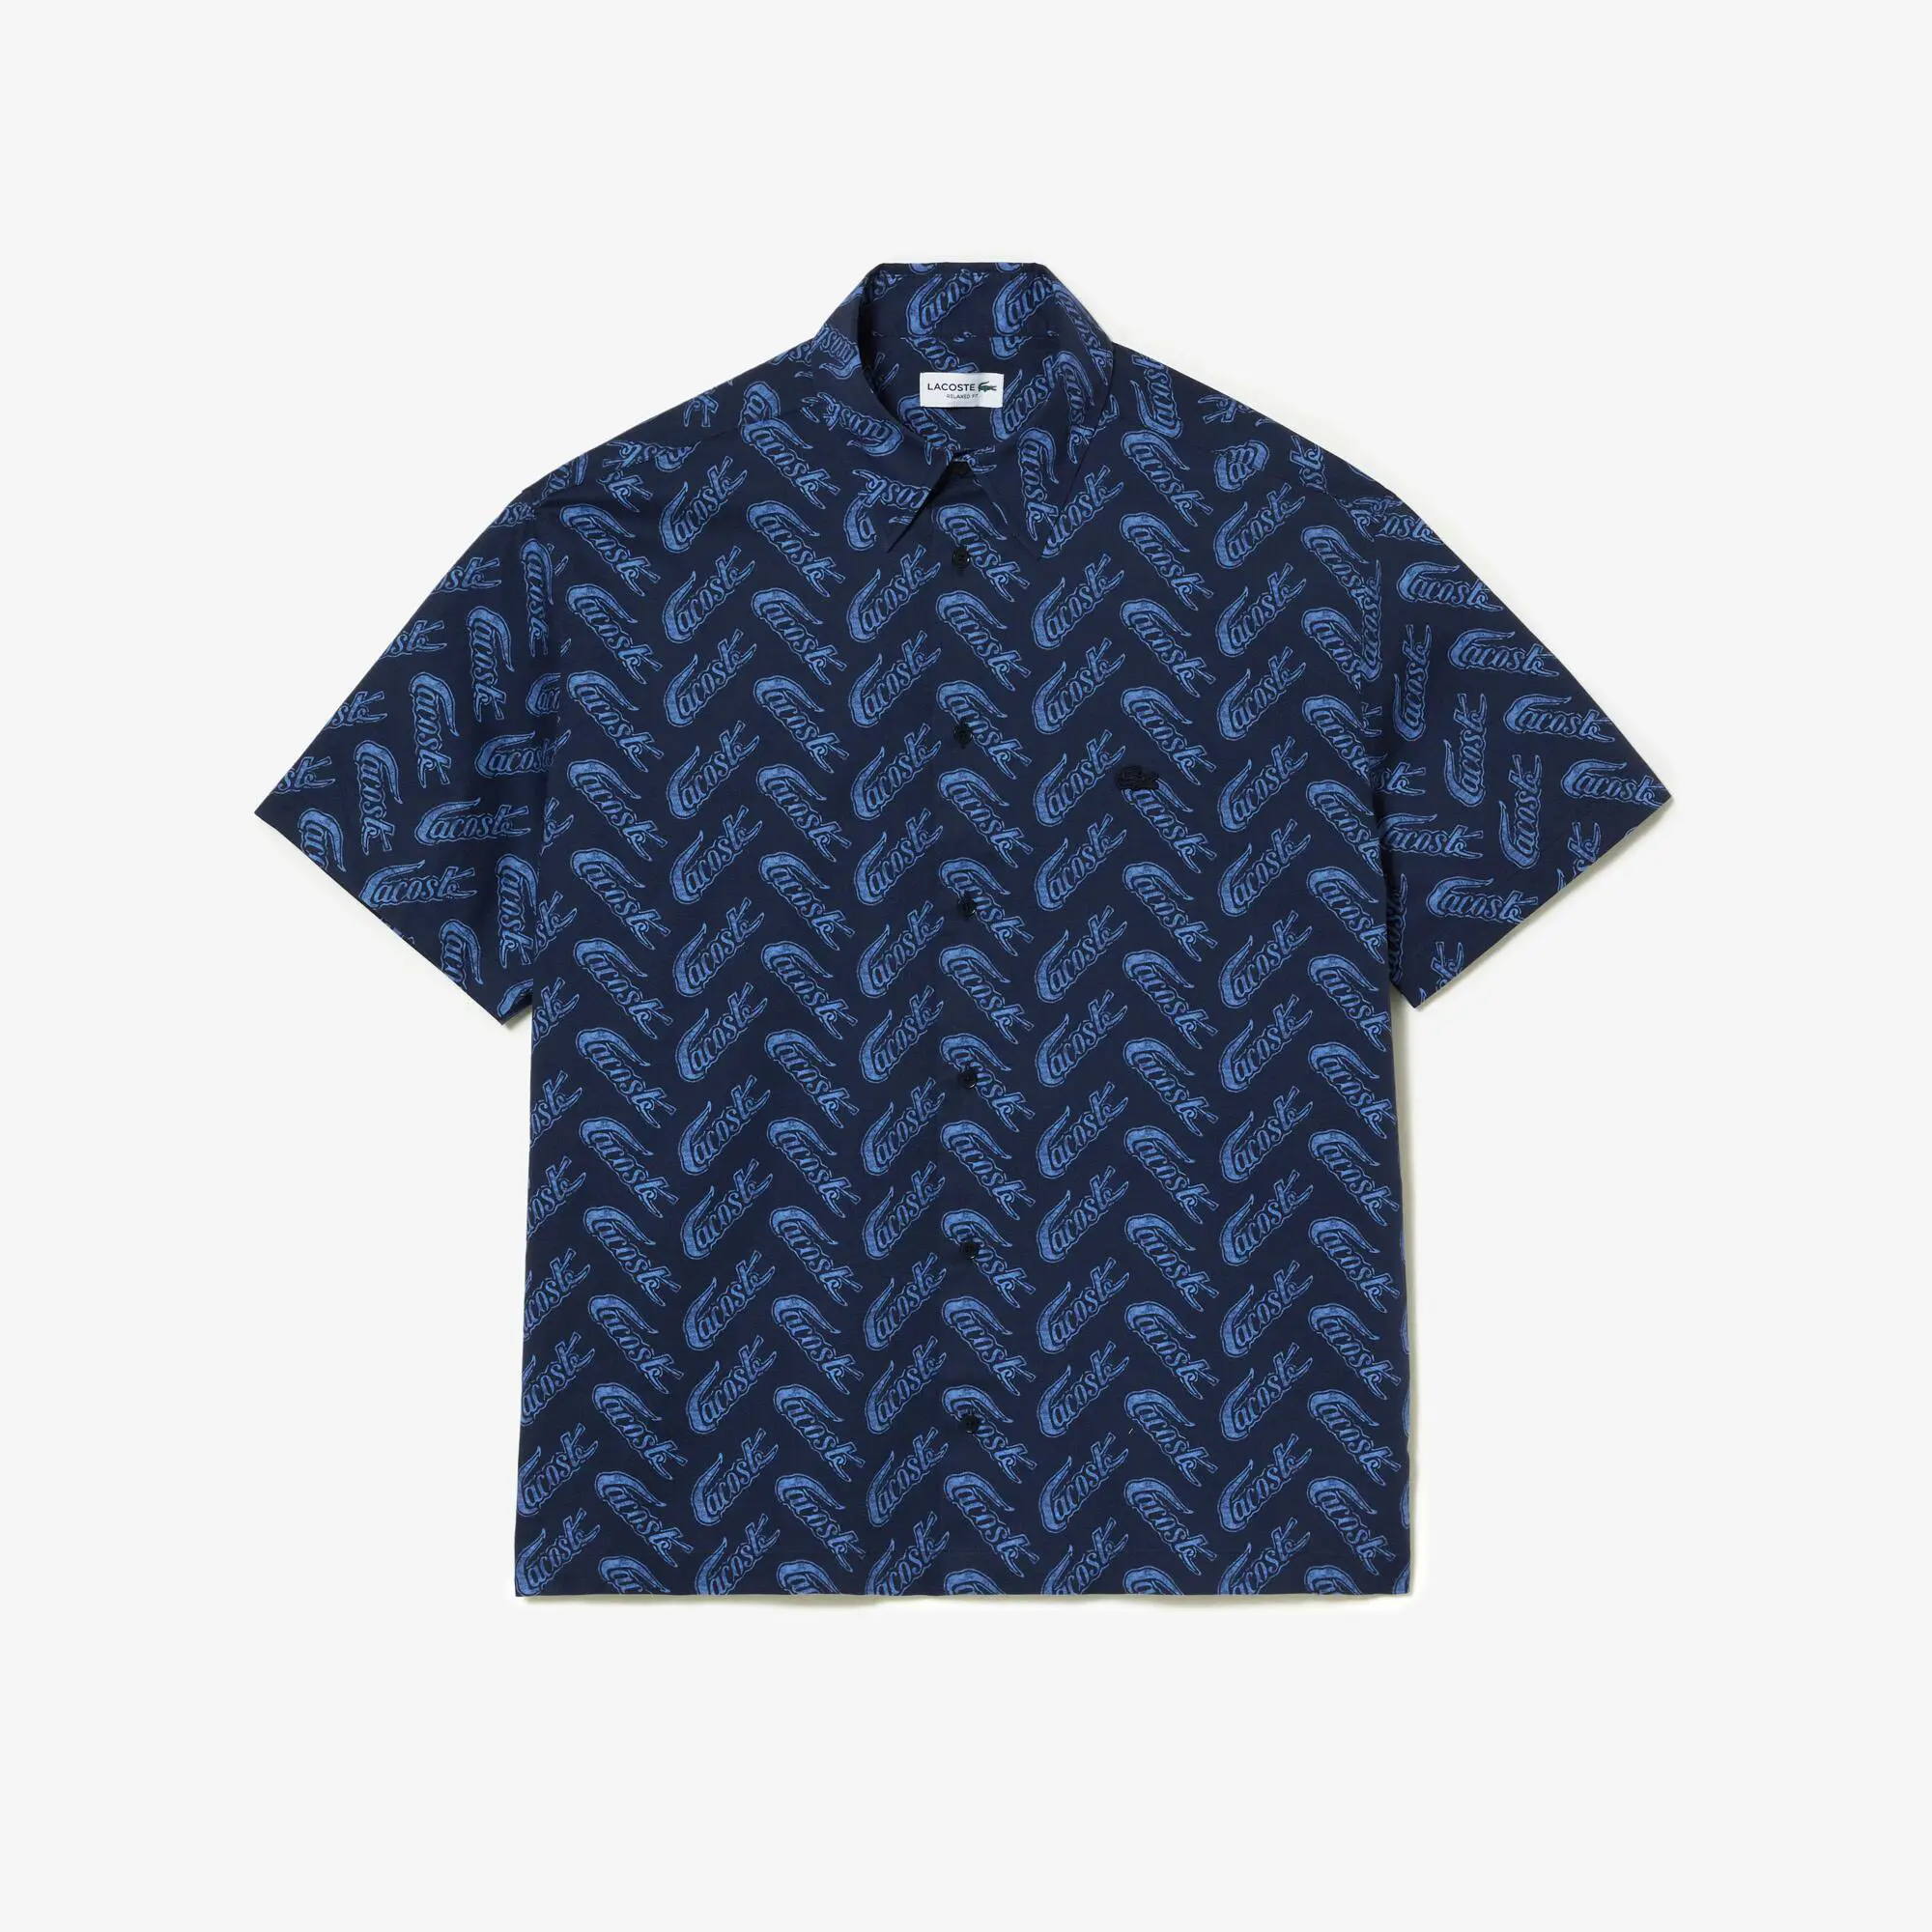 Lacoste Men’s Short Sleeve Vintage Print Shirt. 2